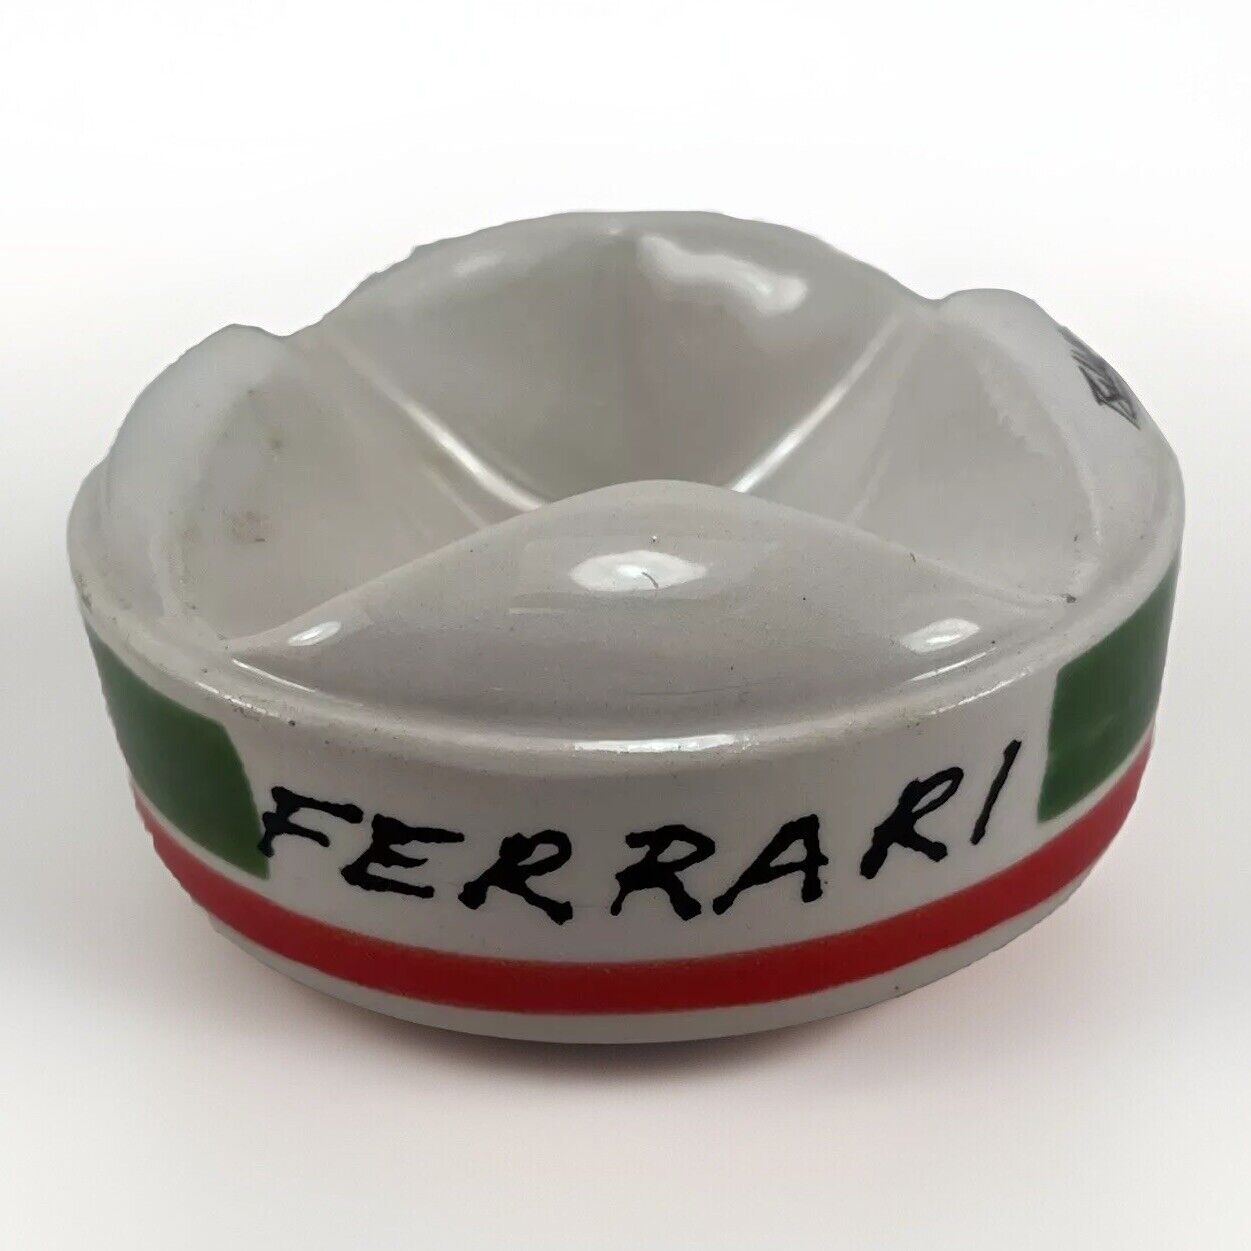 FERRARI Ceramic Ashtray Cigar Pipe Stand Designer Baldelli Italy Rare Vintage